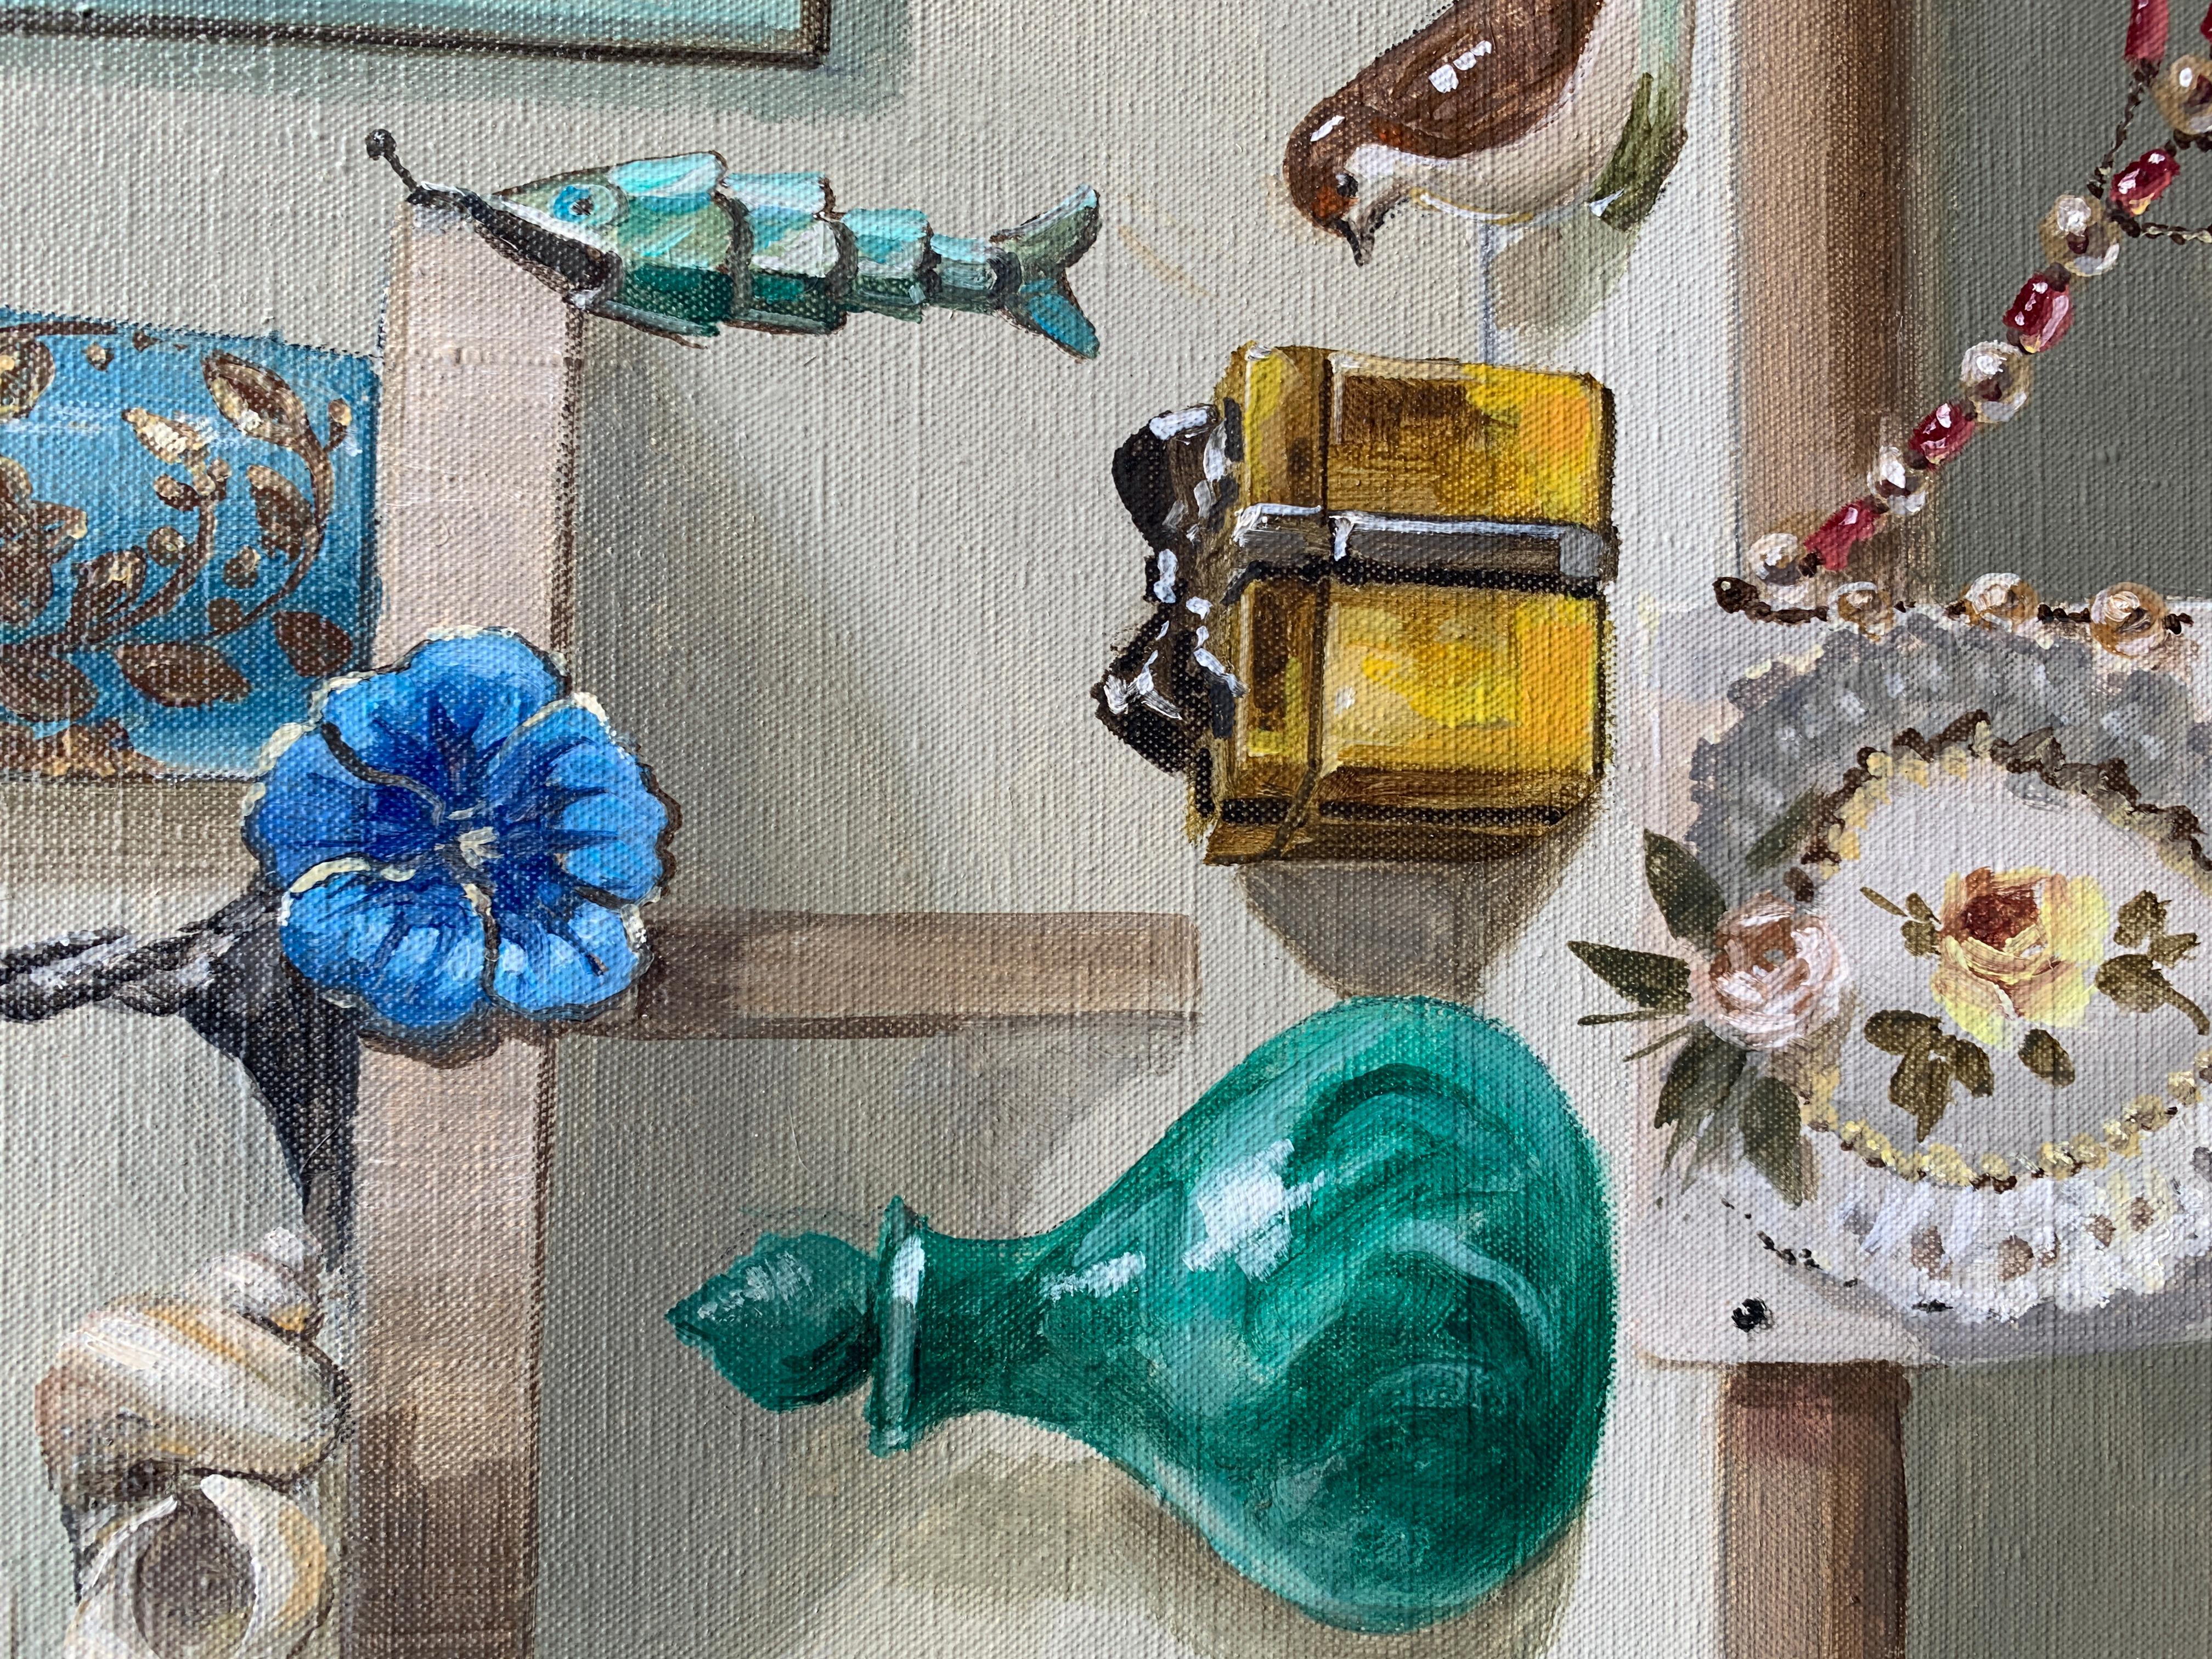 Still life study of treasures, shells, jewelry , flowers, boxes, glass. - American Realist Painting by Deborah Jones